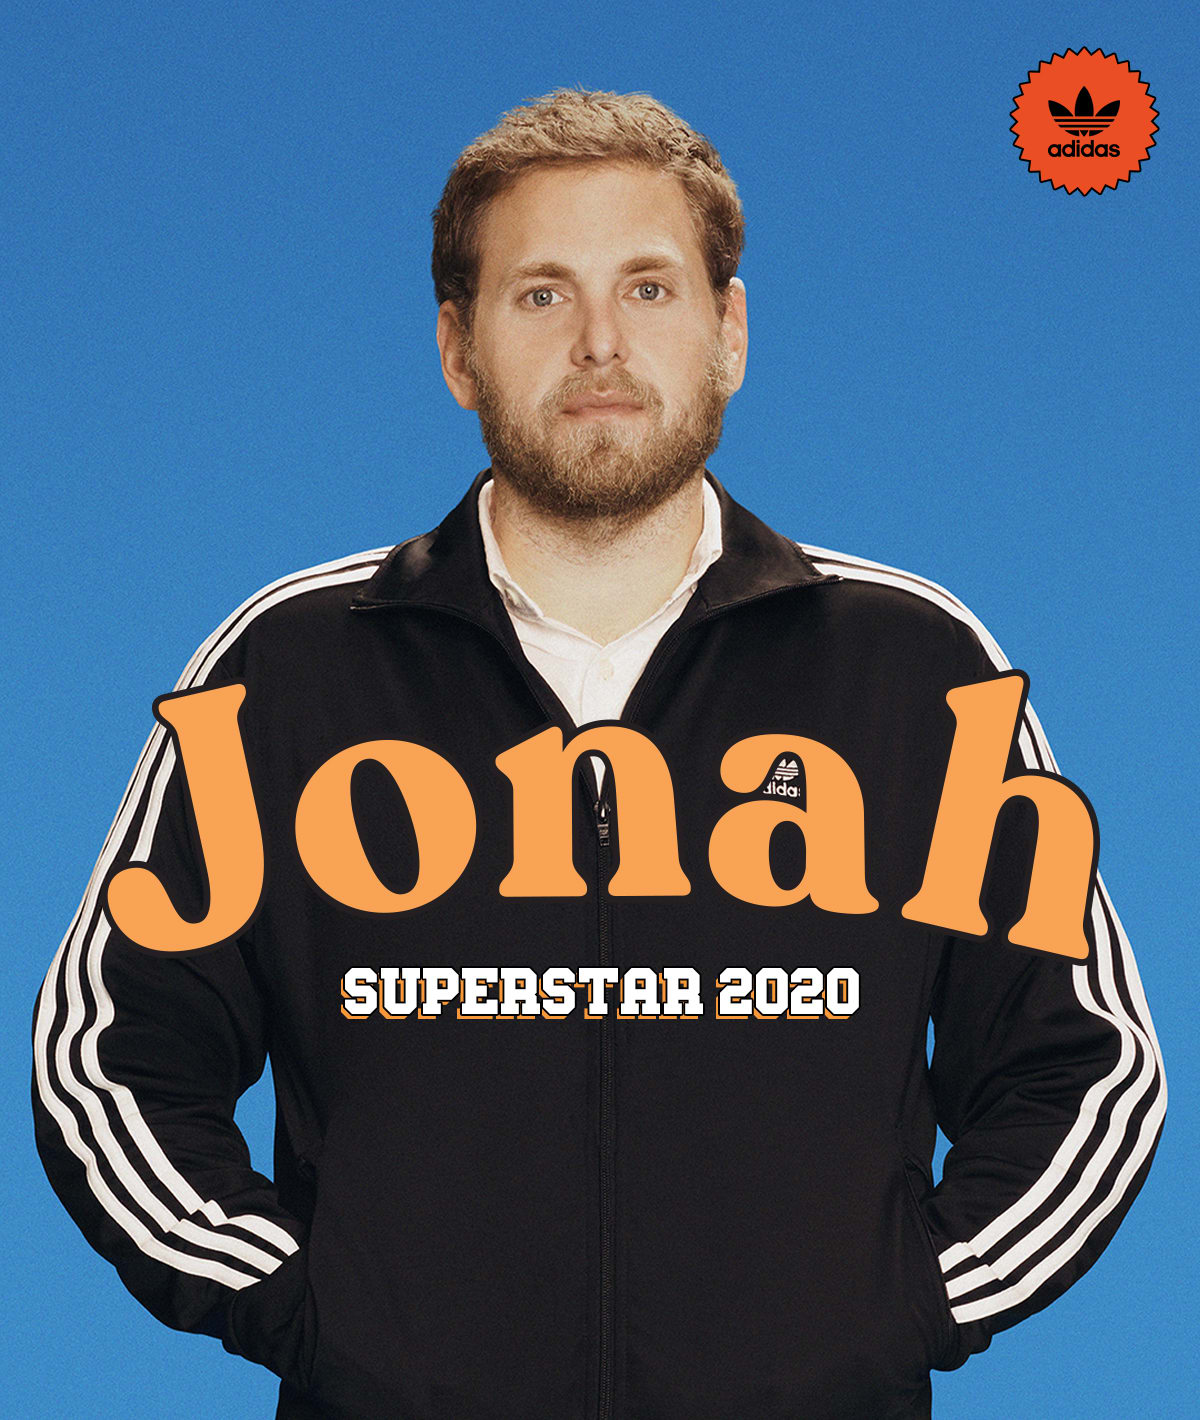 jonah hill superstar adidas